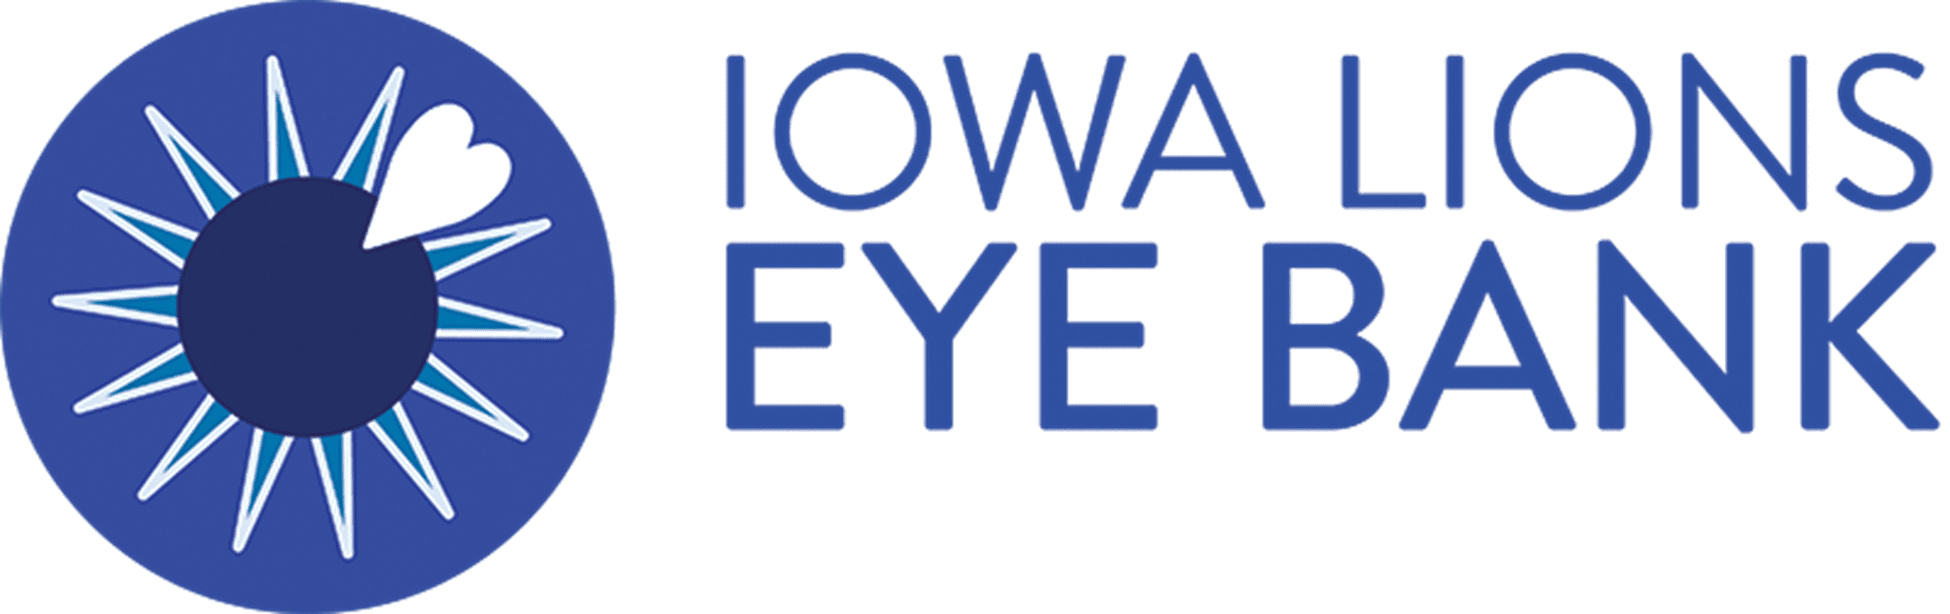 Iowa Lions Eye Bank | Wolfe Eye Clinic